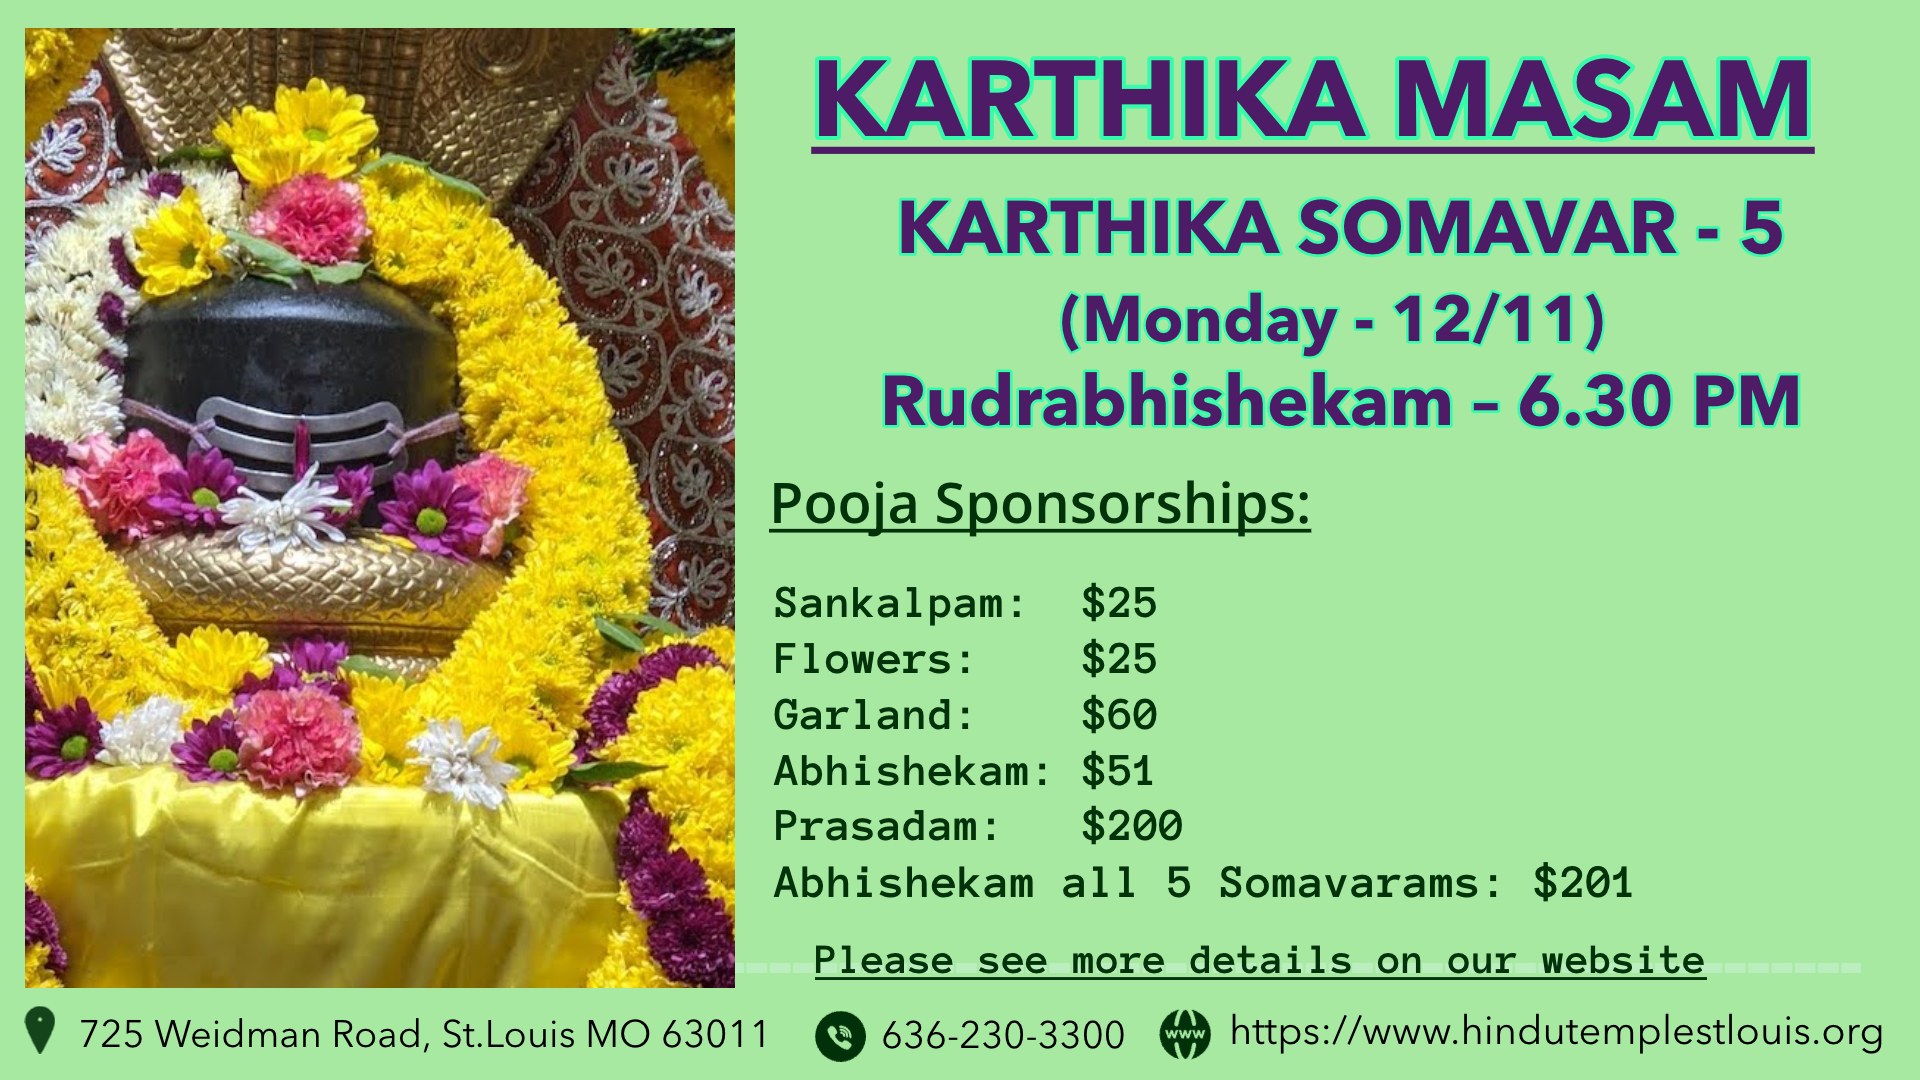 Karthika Masam - Somavar-5